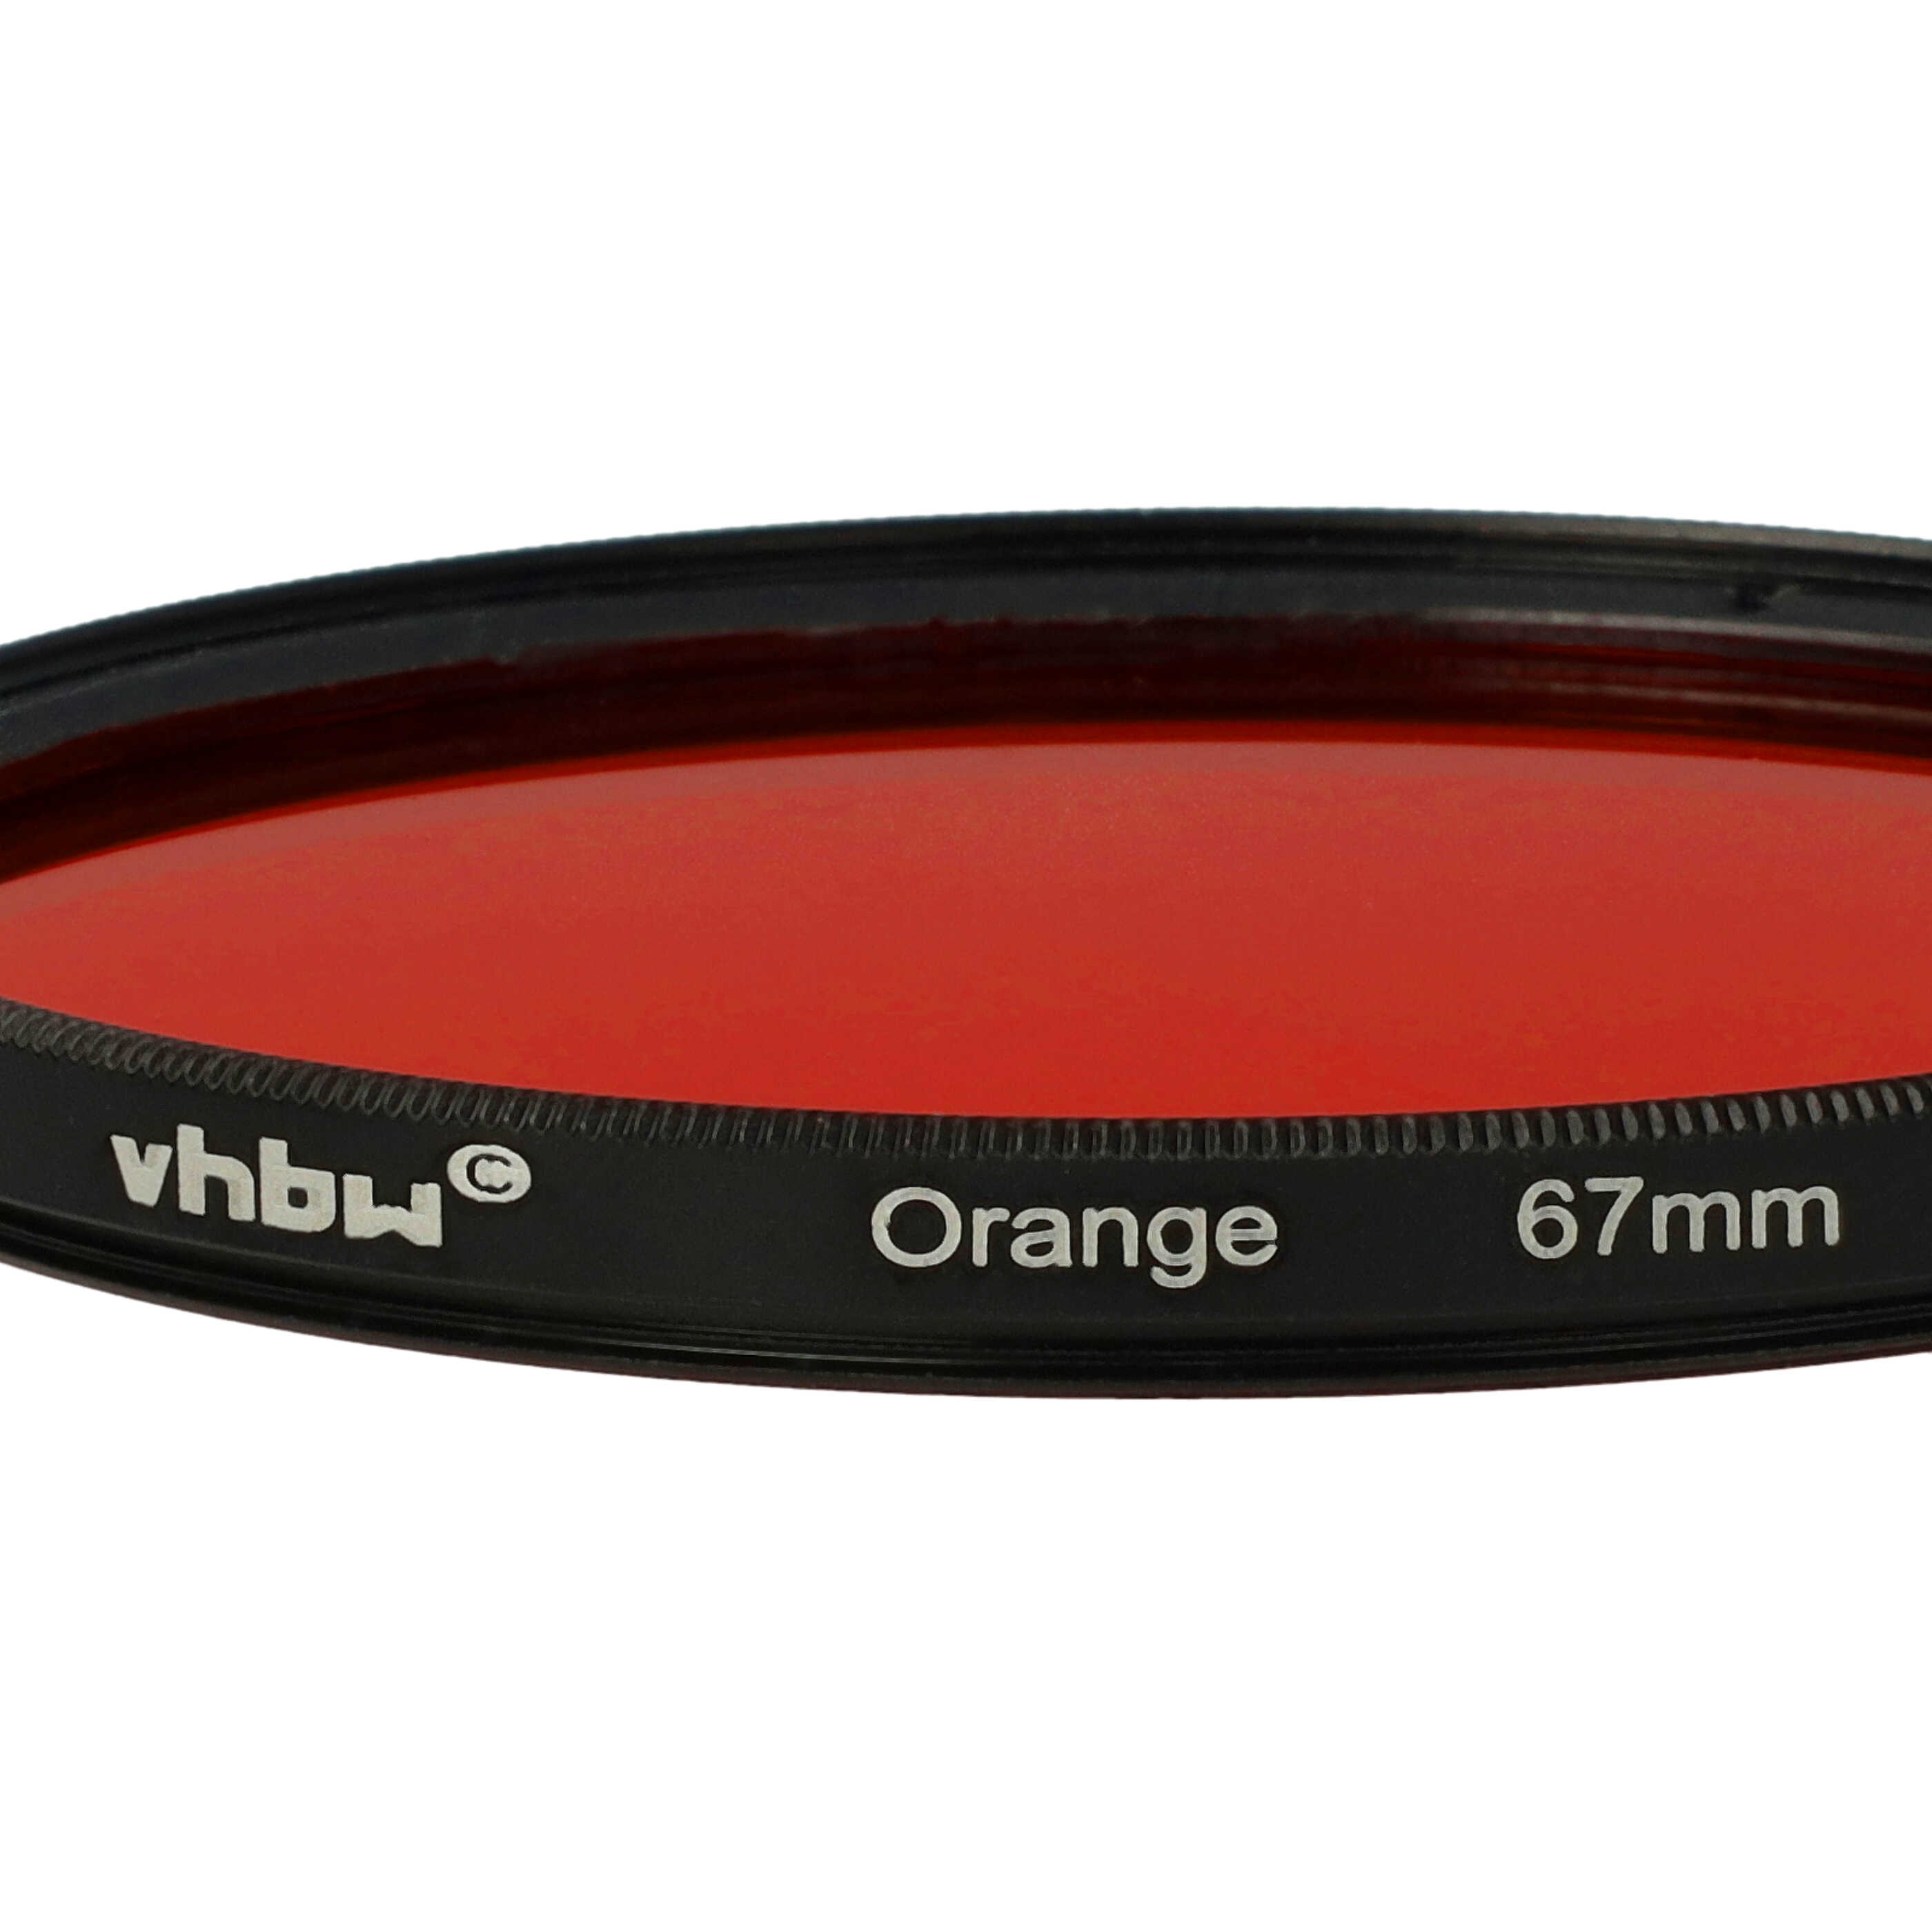 Coloured Filter, Orange suitable for Camera Lenses with 67 mm Filter Thread - Orange Filter